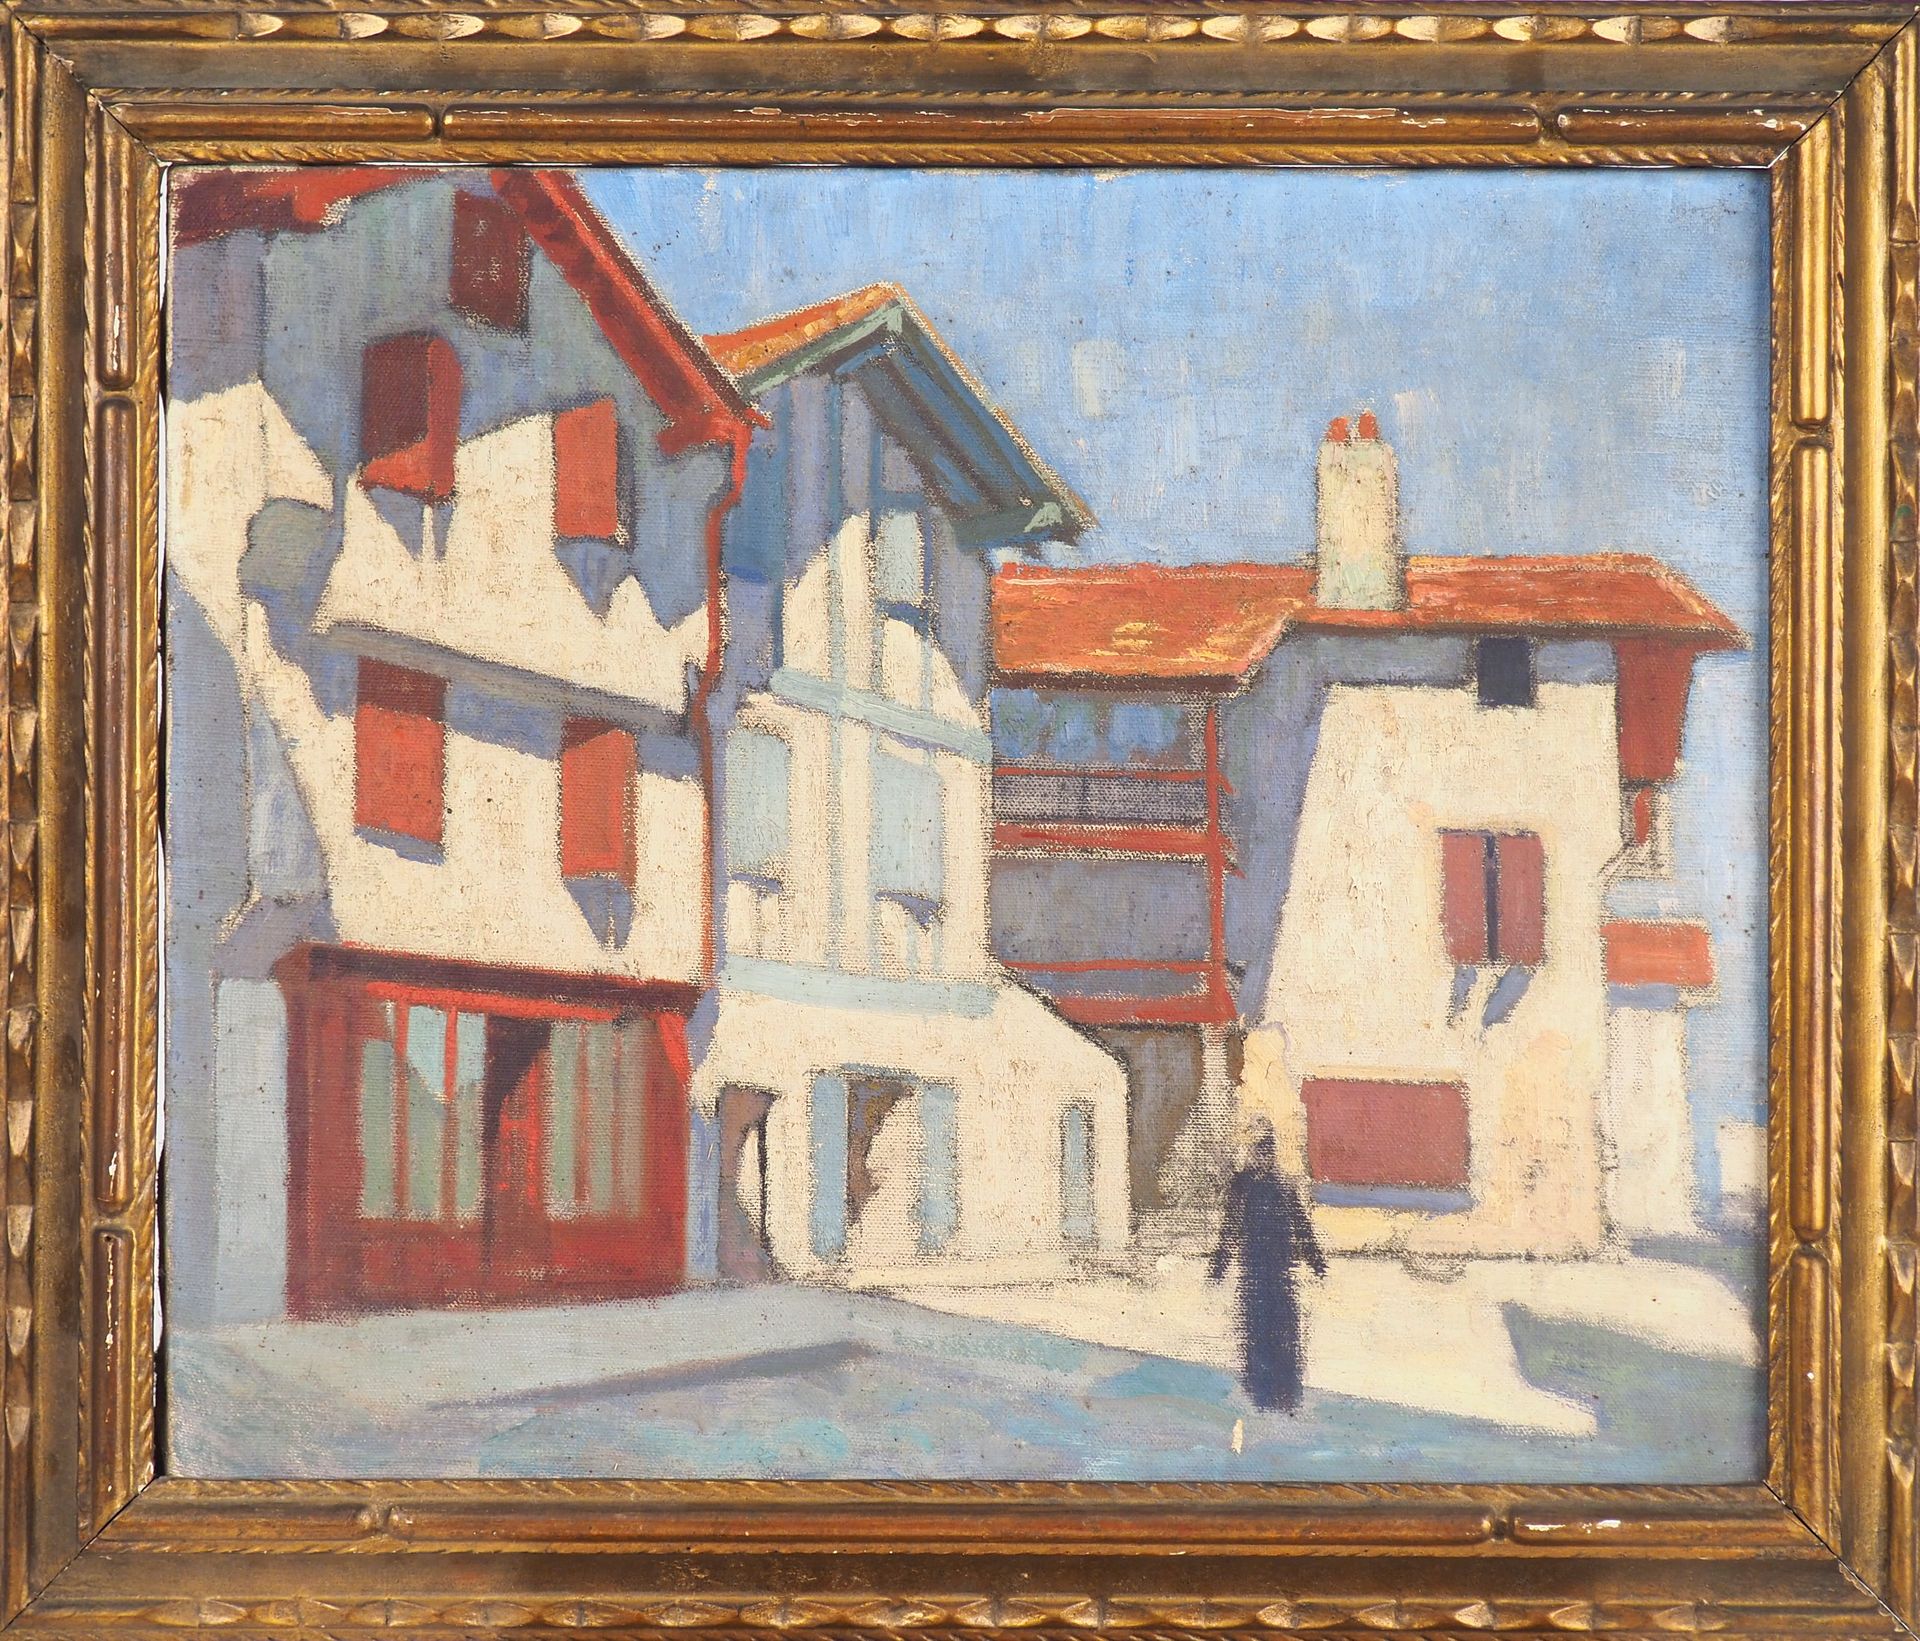 Null Raymond VIRAC. 

"Place au pays basque".

Olio su tela.

Dim. 38 x 46 cm.